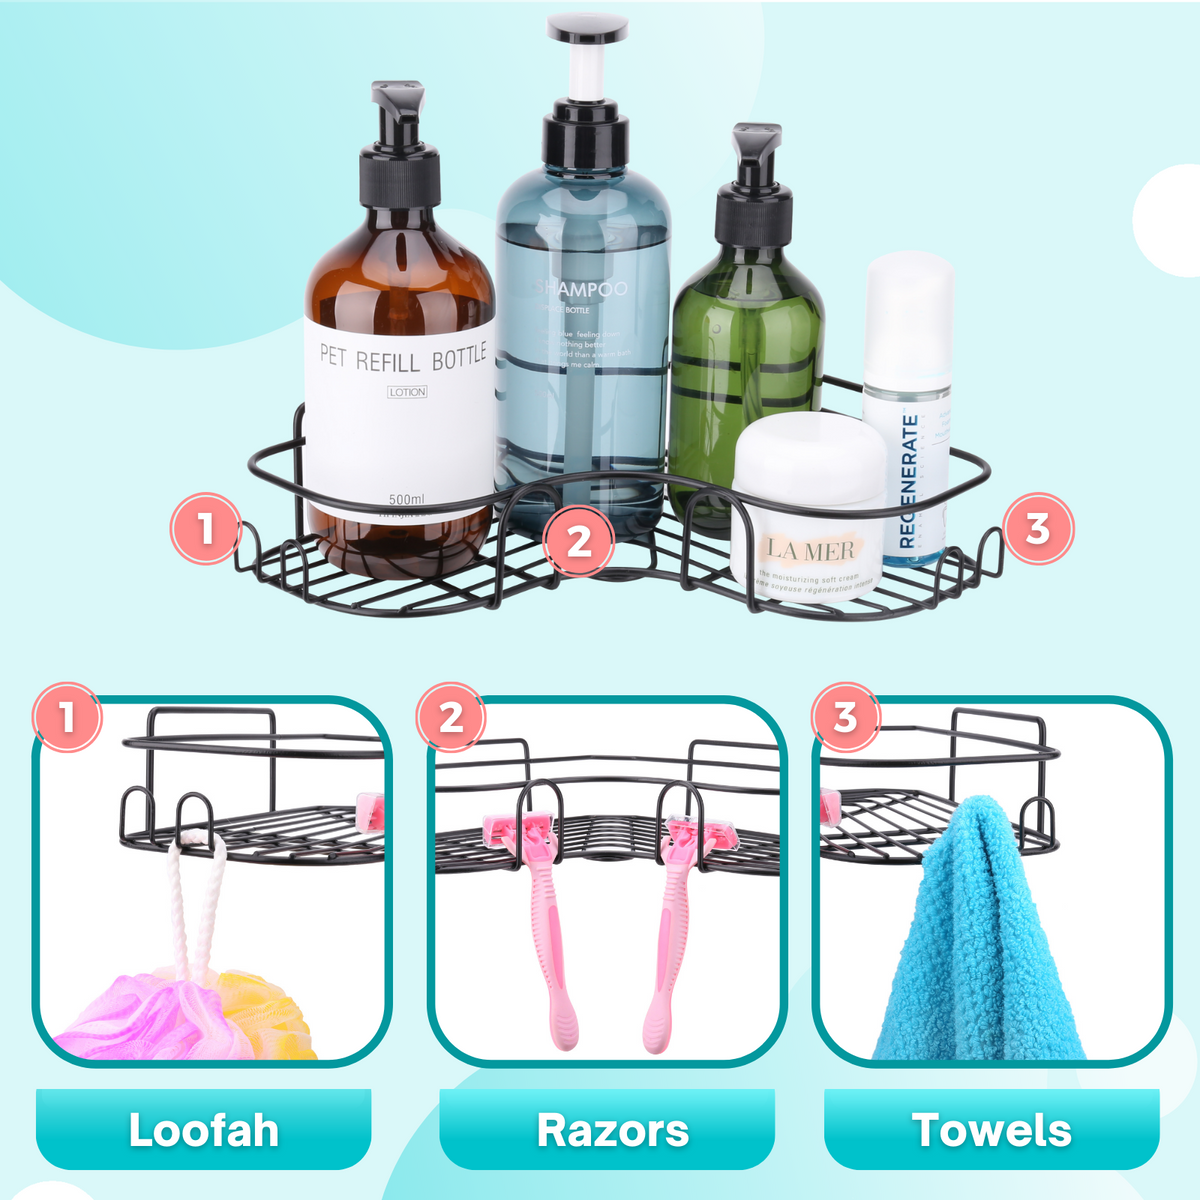 KeFanta Shower Caddy Over Shower Head, Silver Hanging Organizer, Storage Rack with Hooks for Razor, Bathroom Shampoo Holder